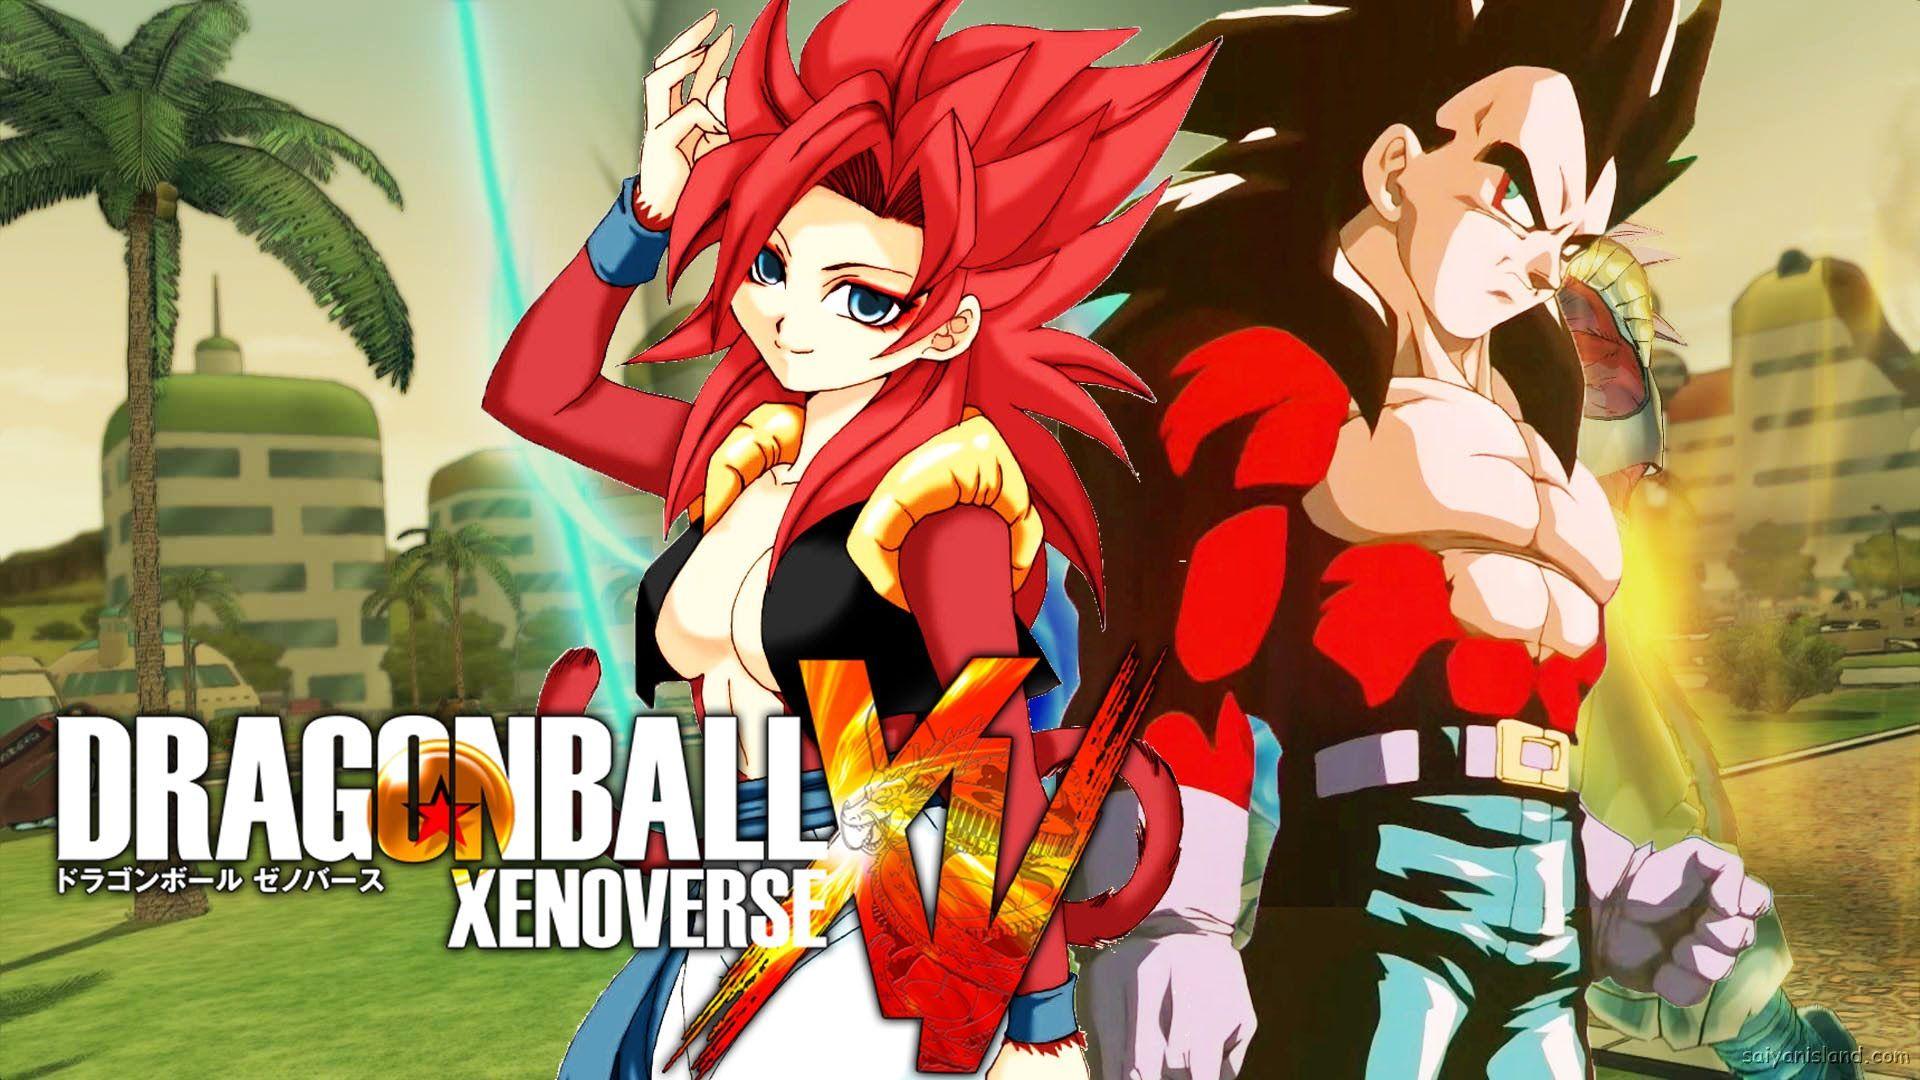 Super Saiyan 4 Vegeta Dragon Ball Z, Xenoverse Gameplay DLC PS4